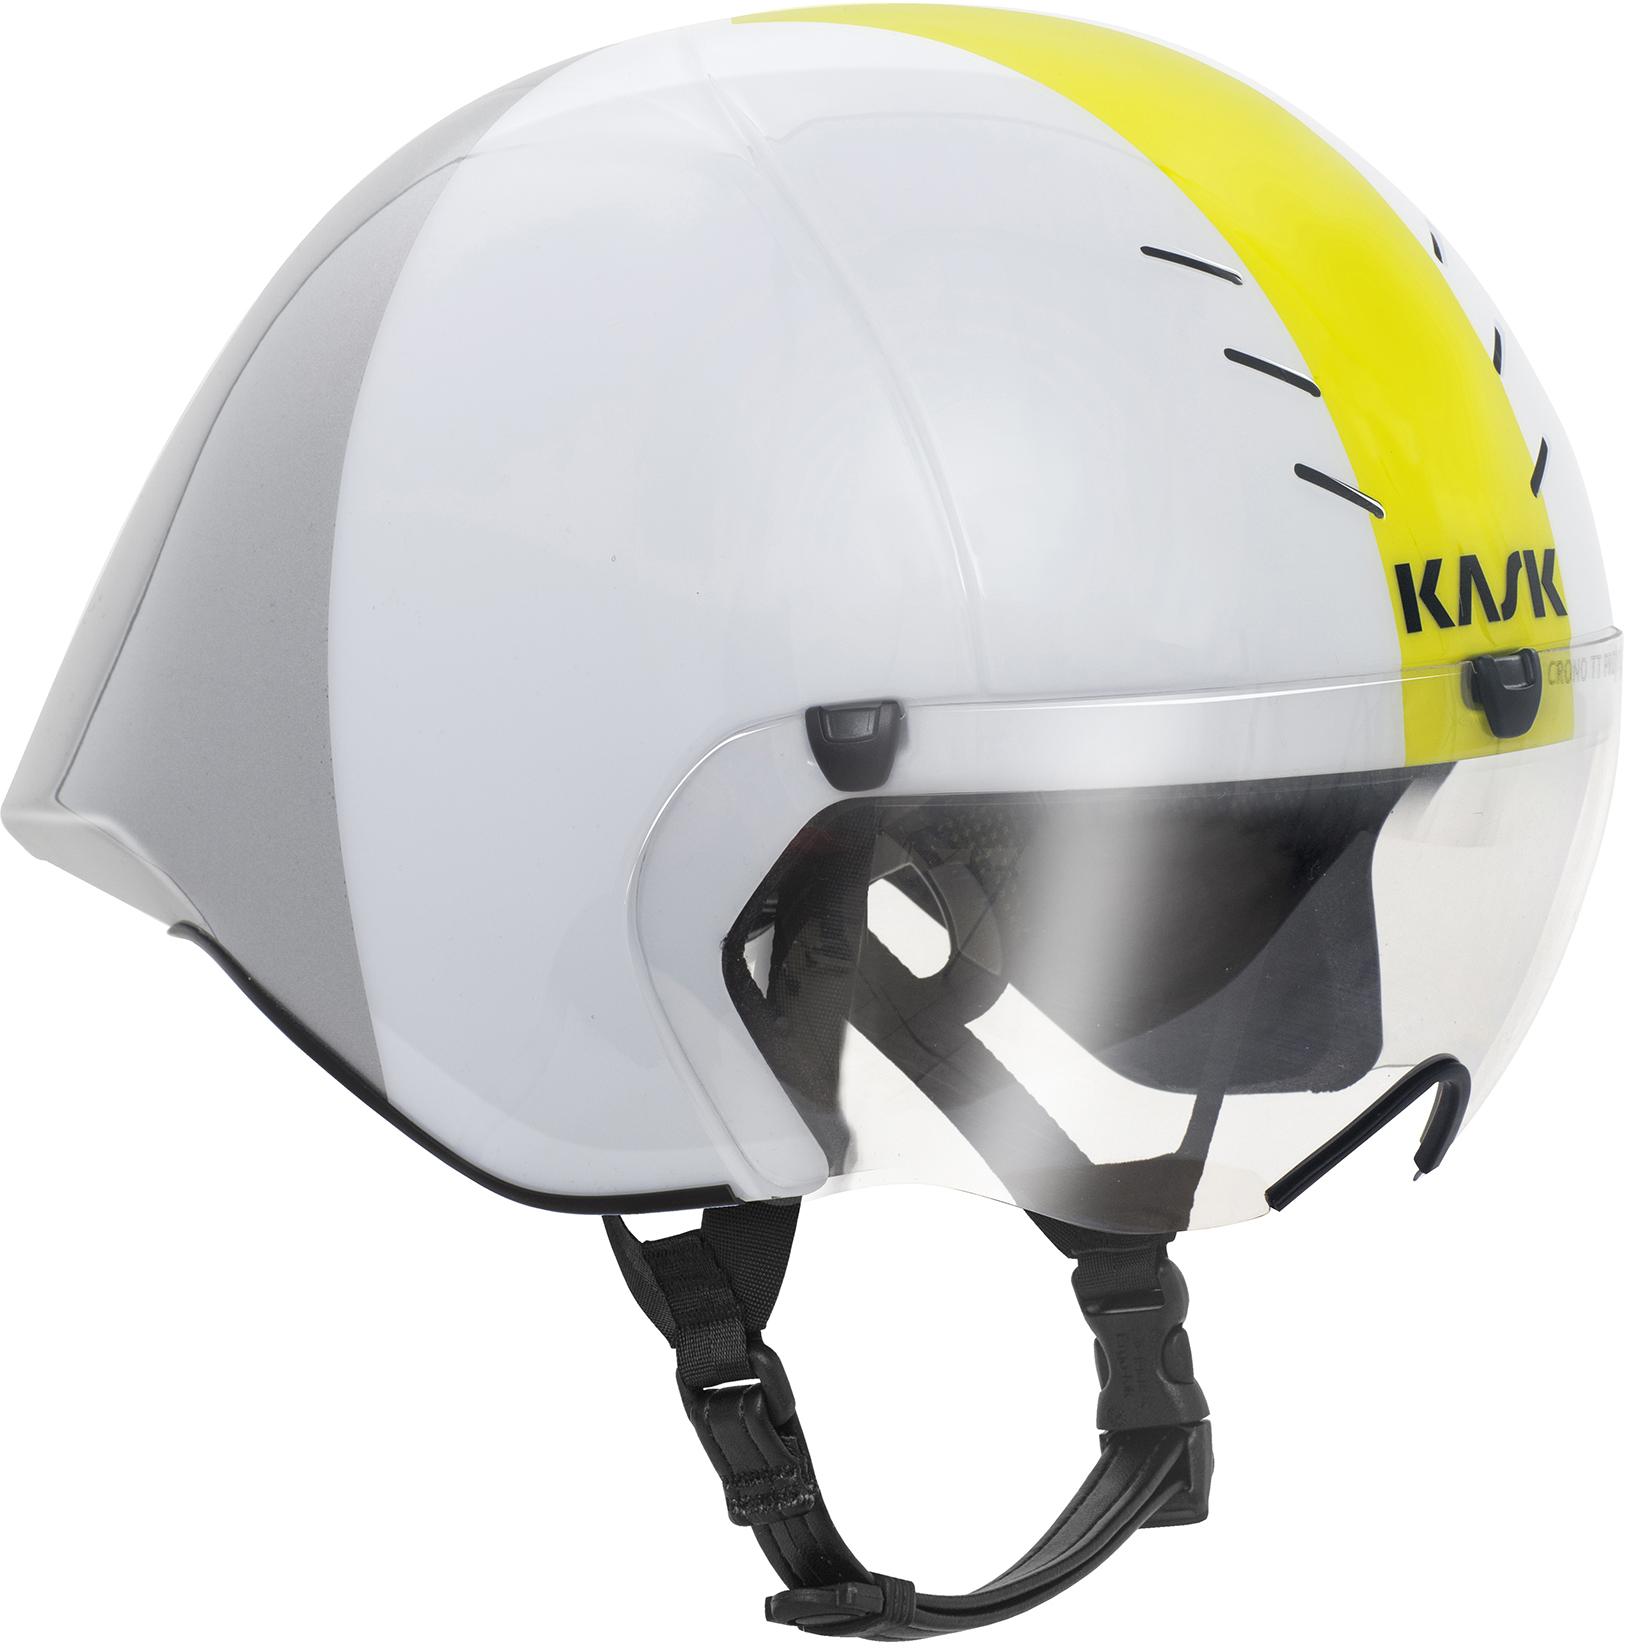 Kask Mistral Aero Helmet - White/silver